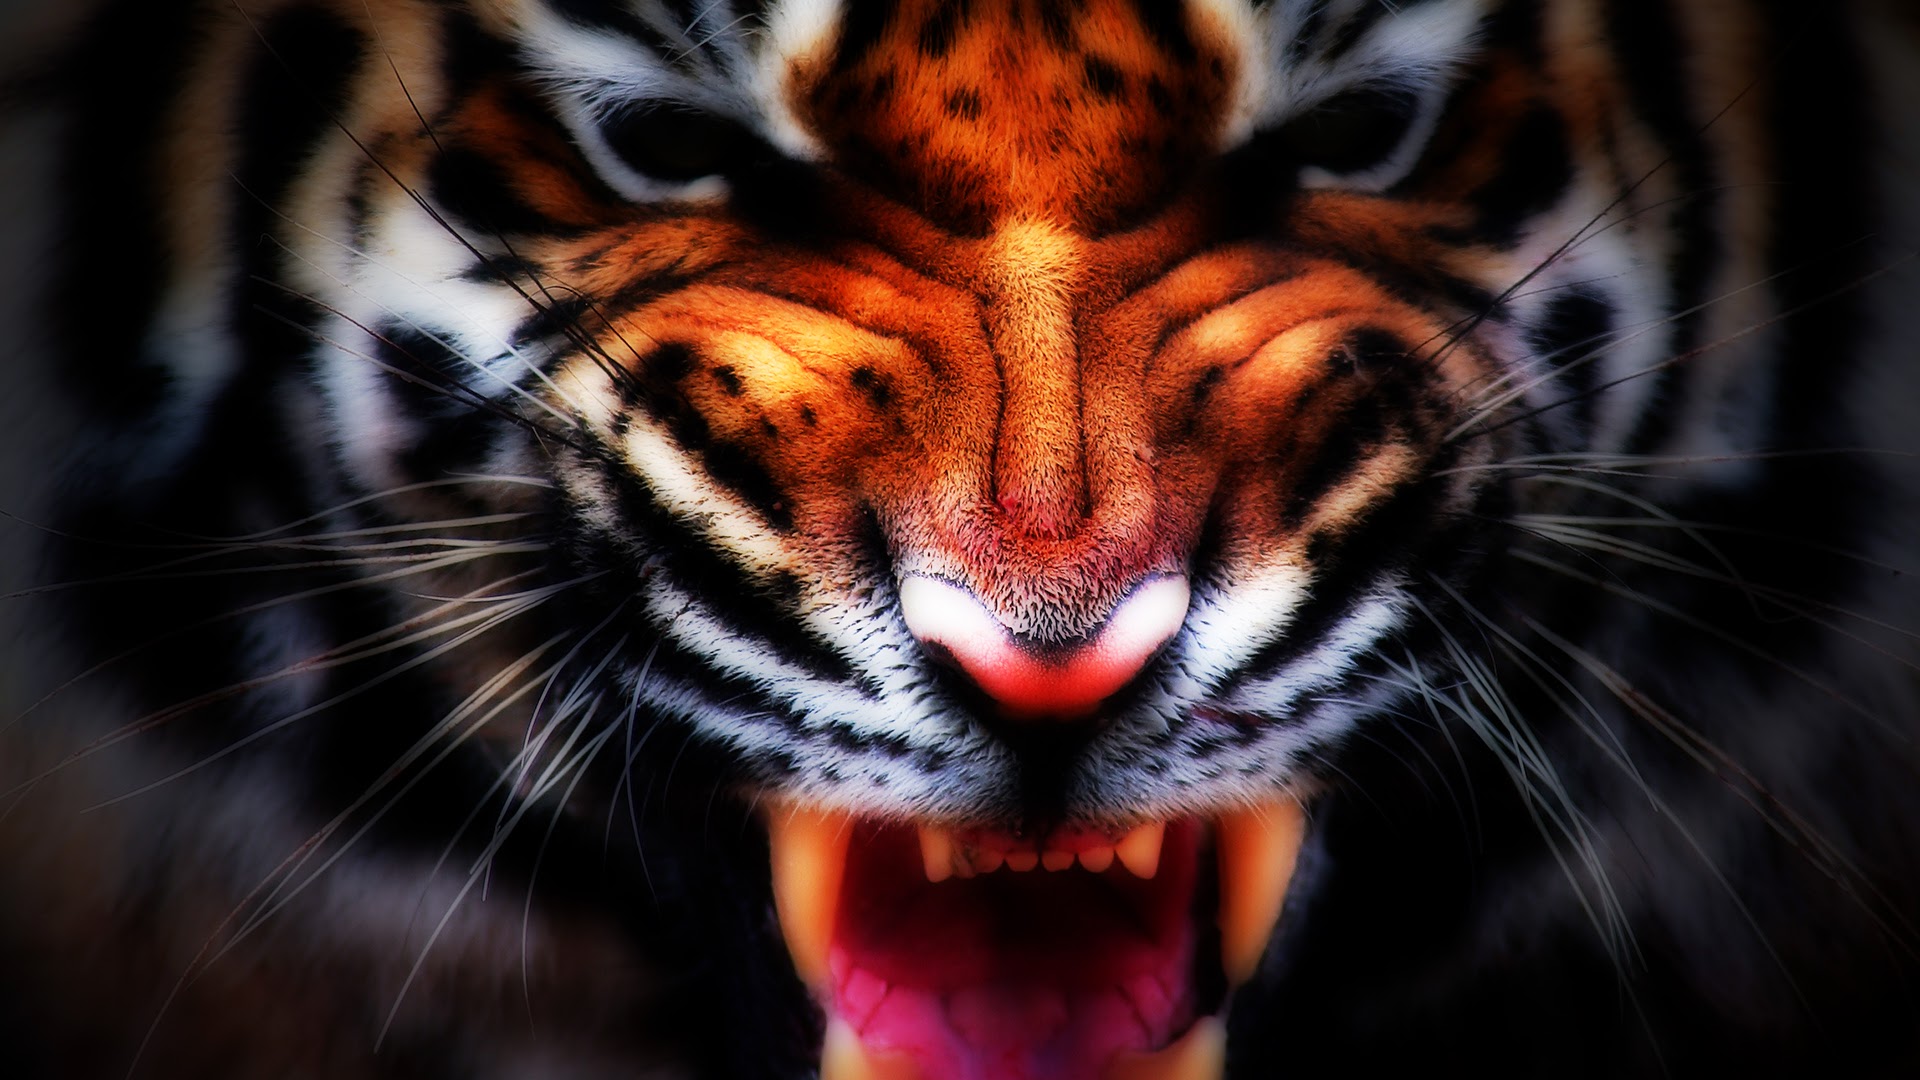 Growling Tiger Face Hd Wallpaper Animal Image - Kempton Park Cheeky Tiger , HD Wallpaper & Backgrounds